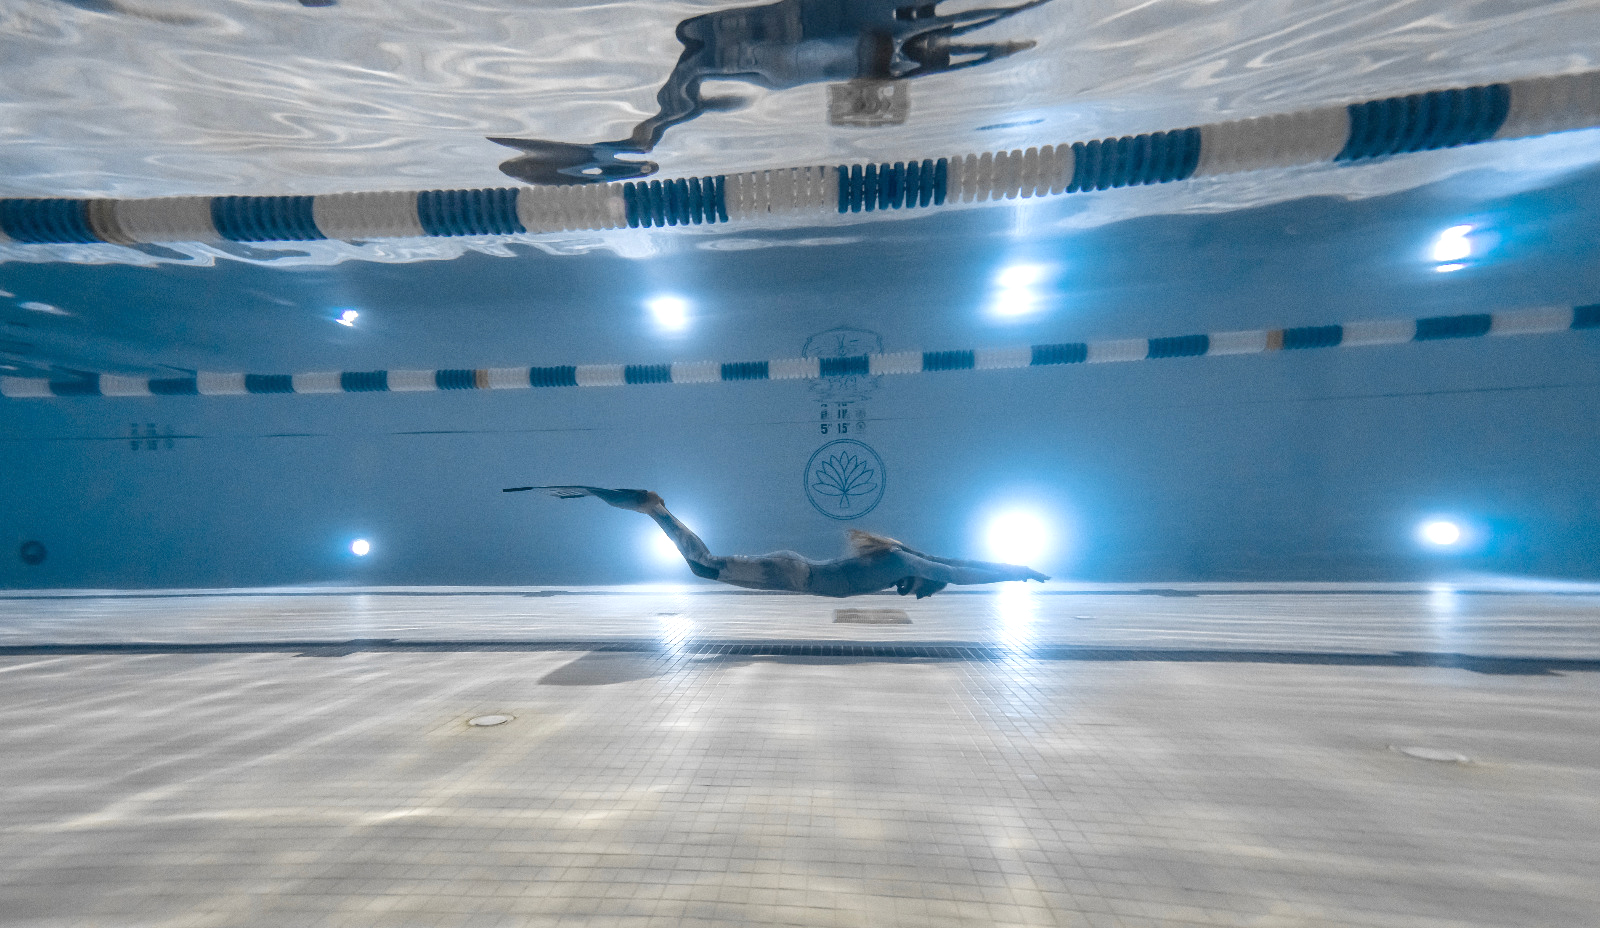 freediver training in swimming pool